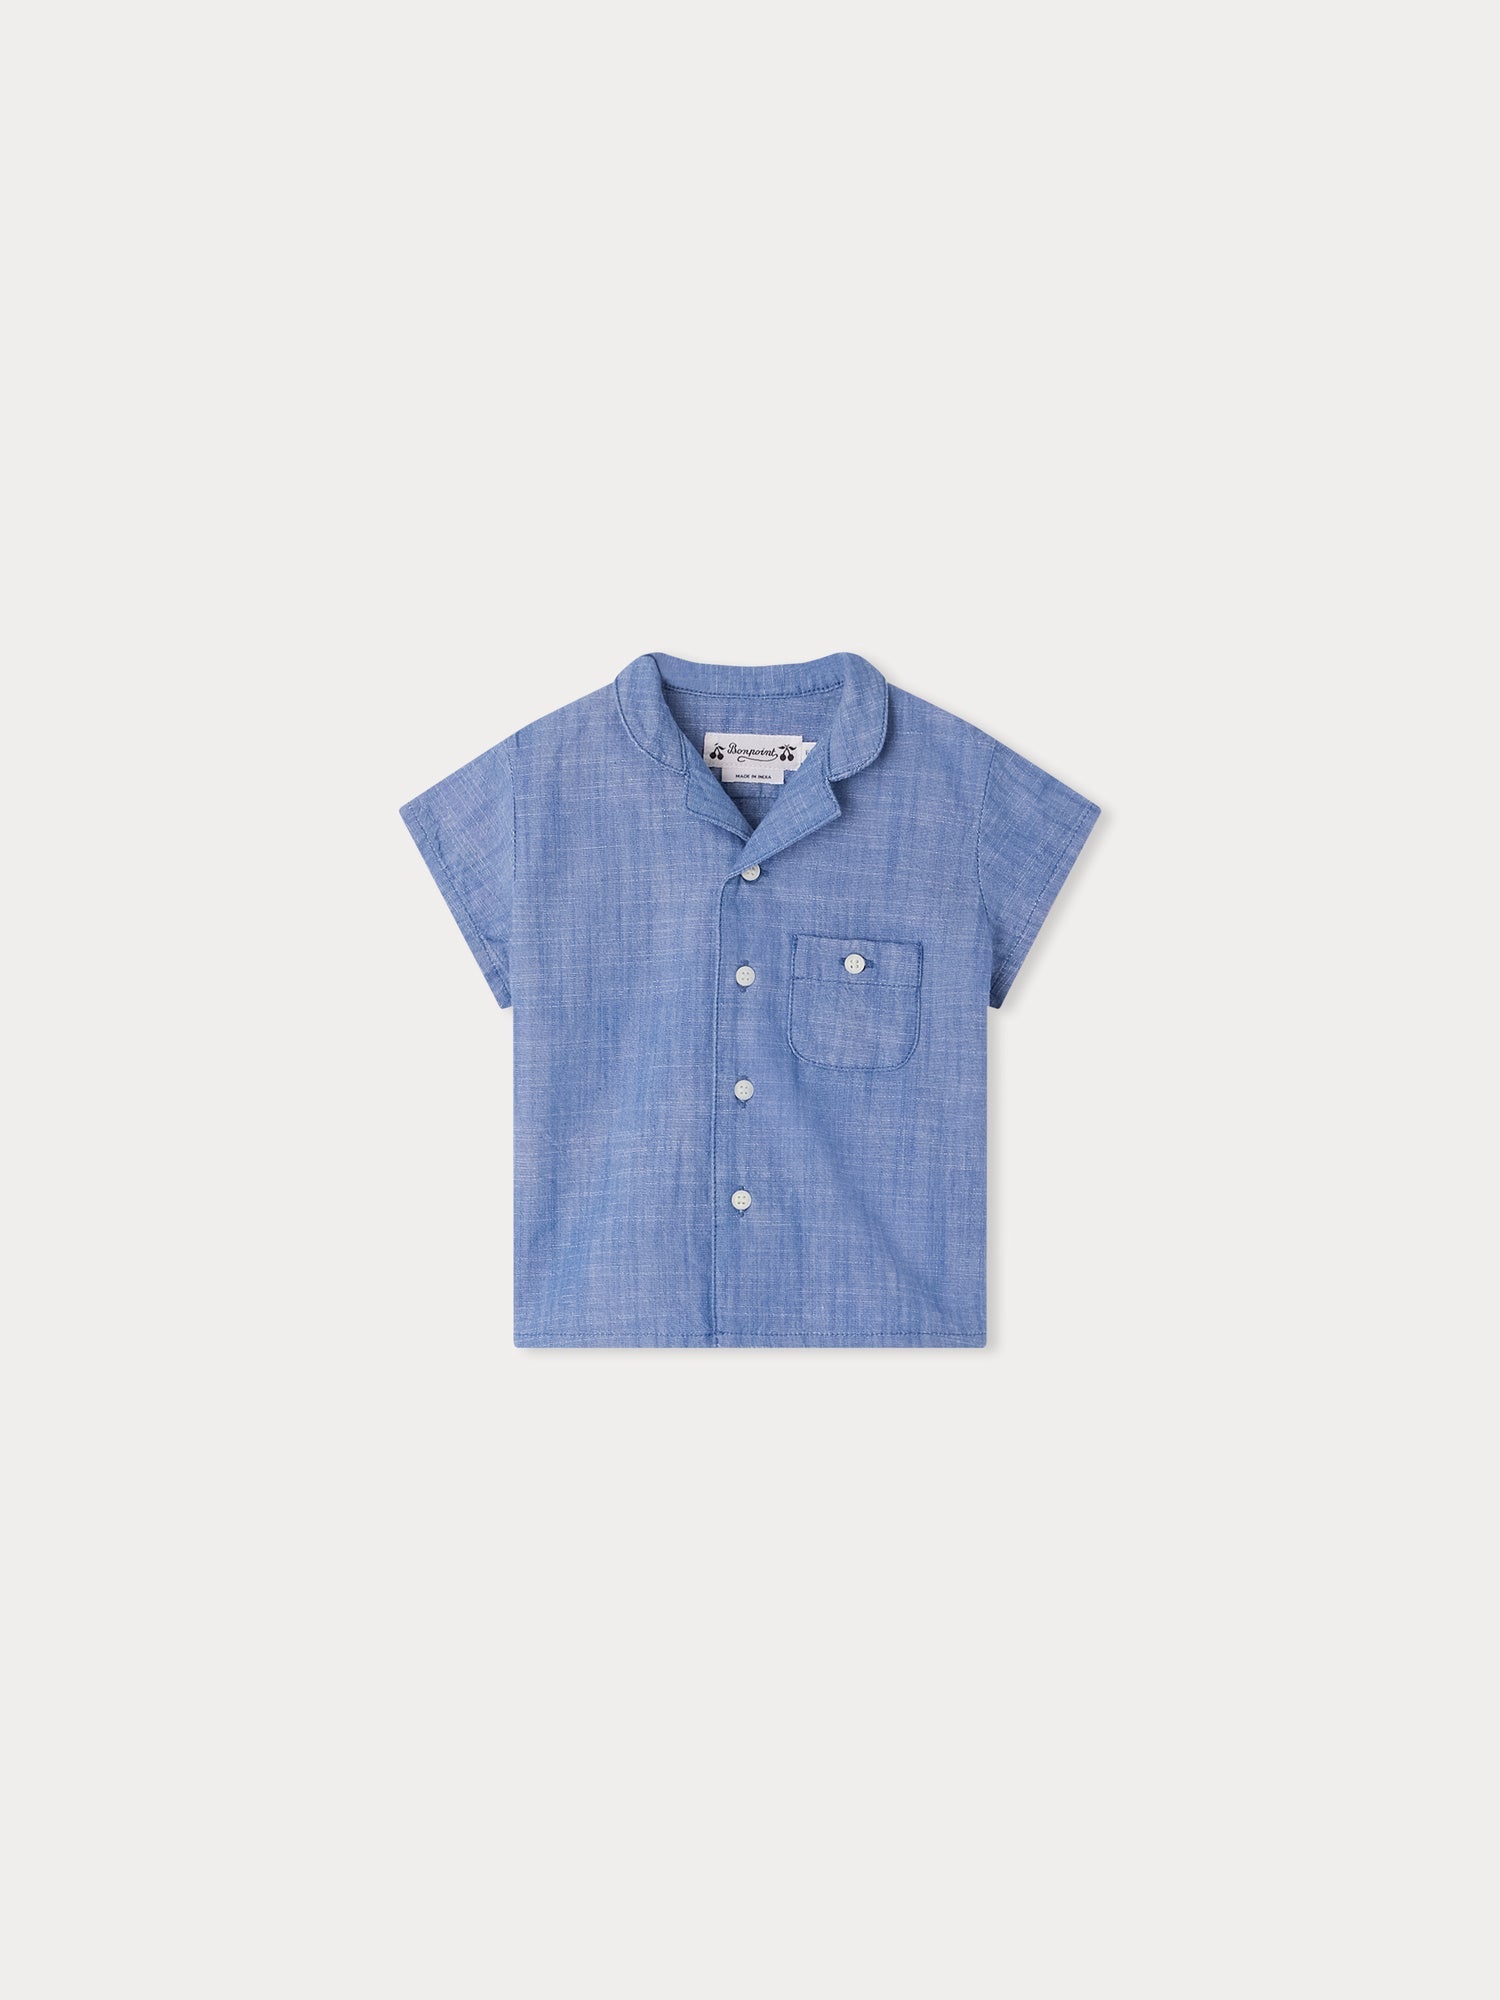 Baby Boys Blue Cotton Shirt